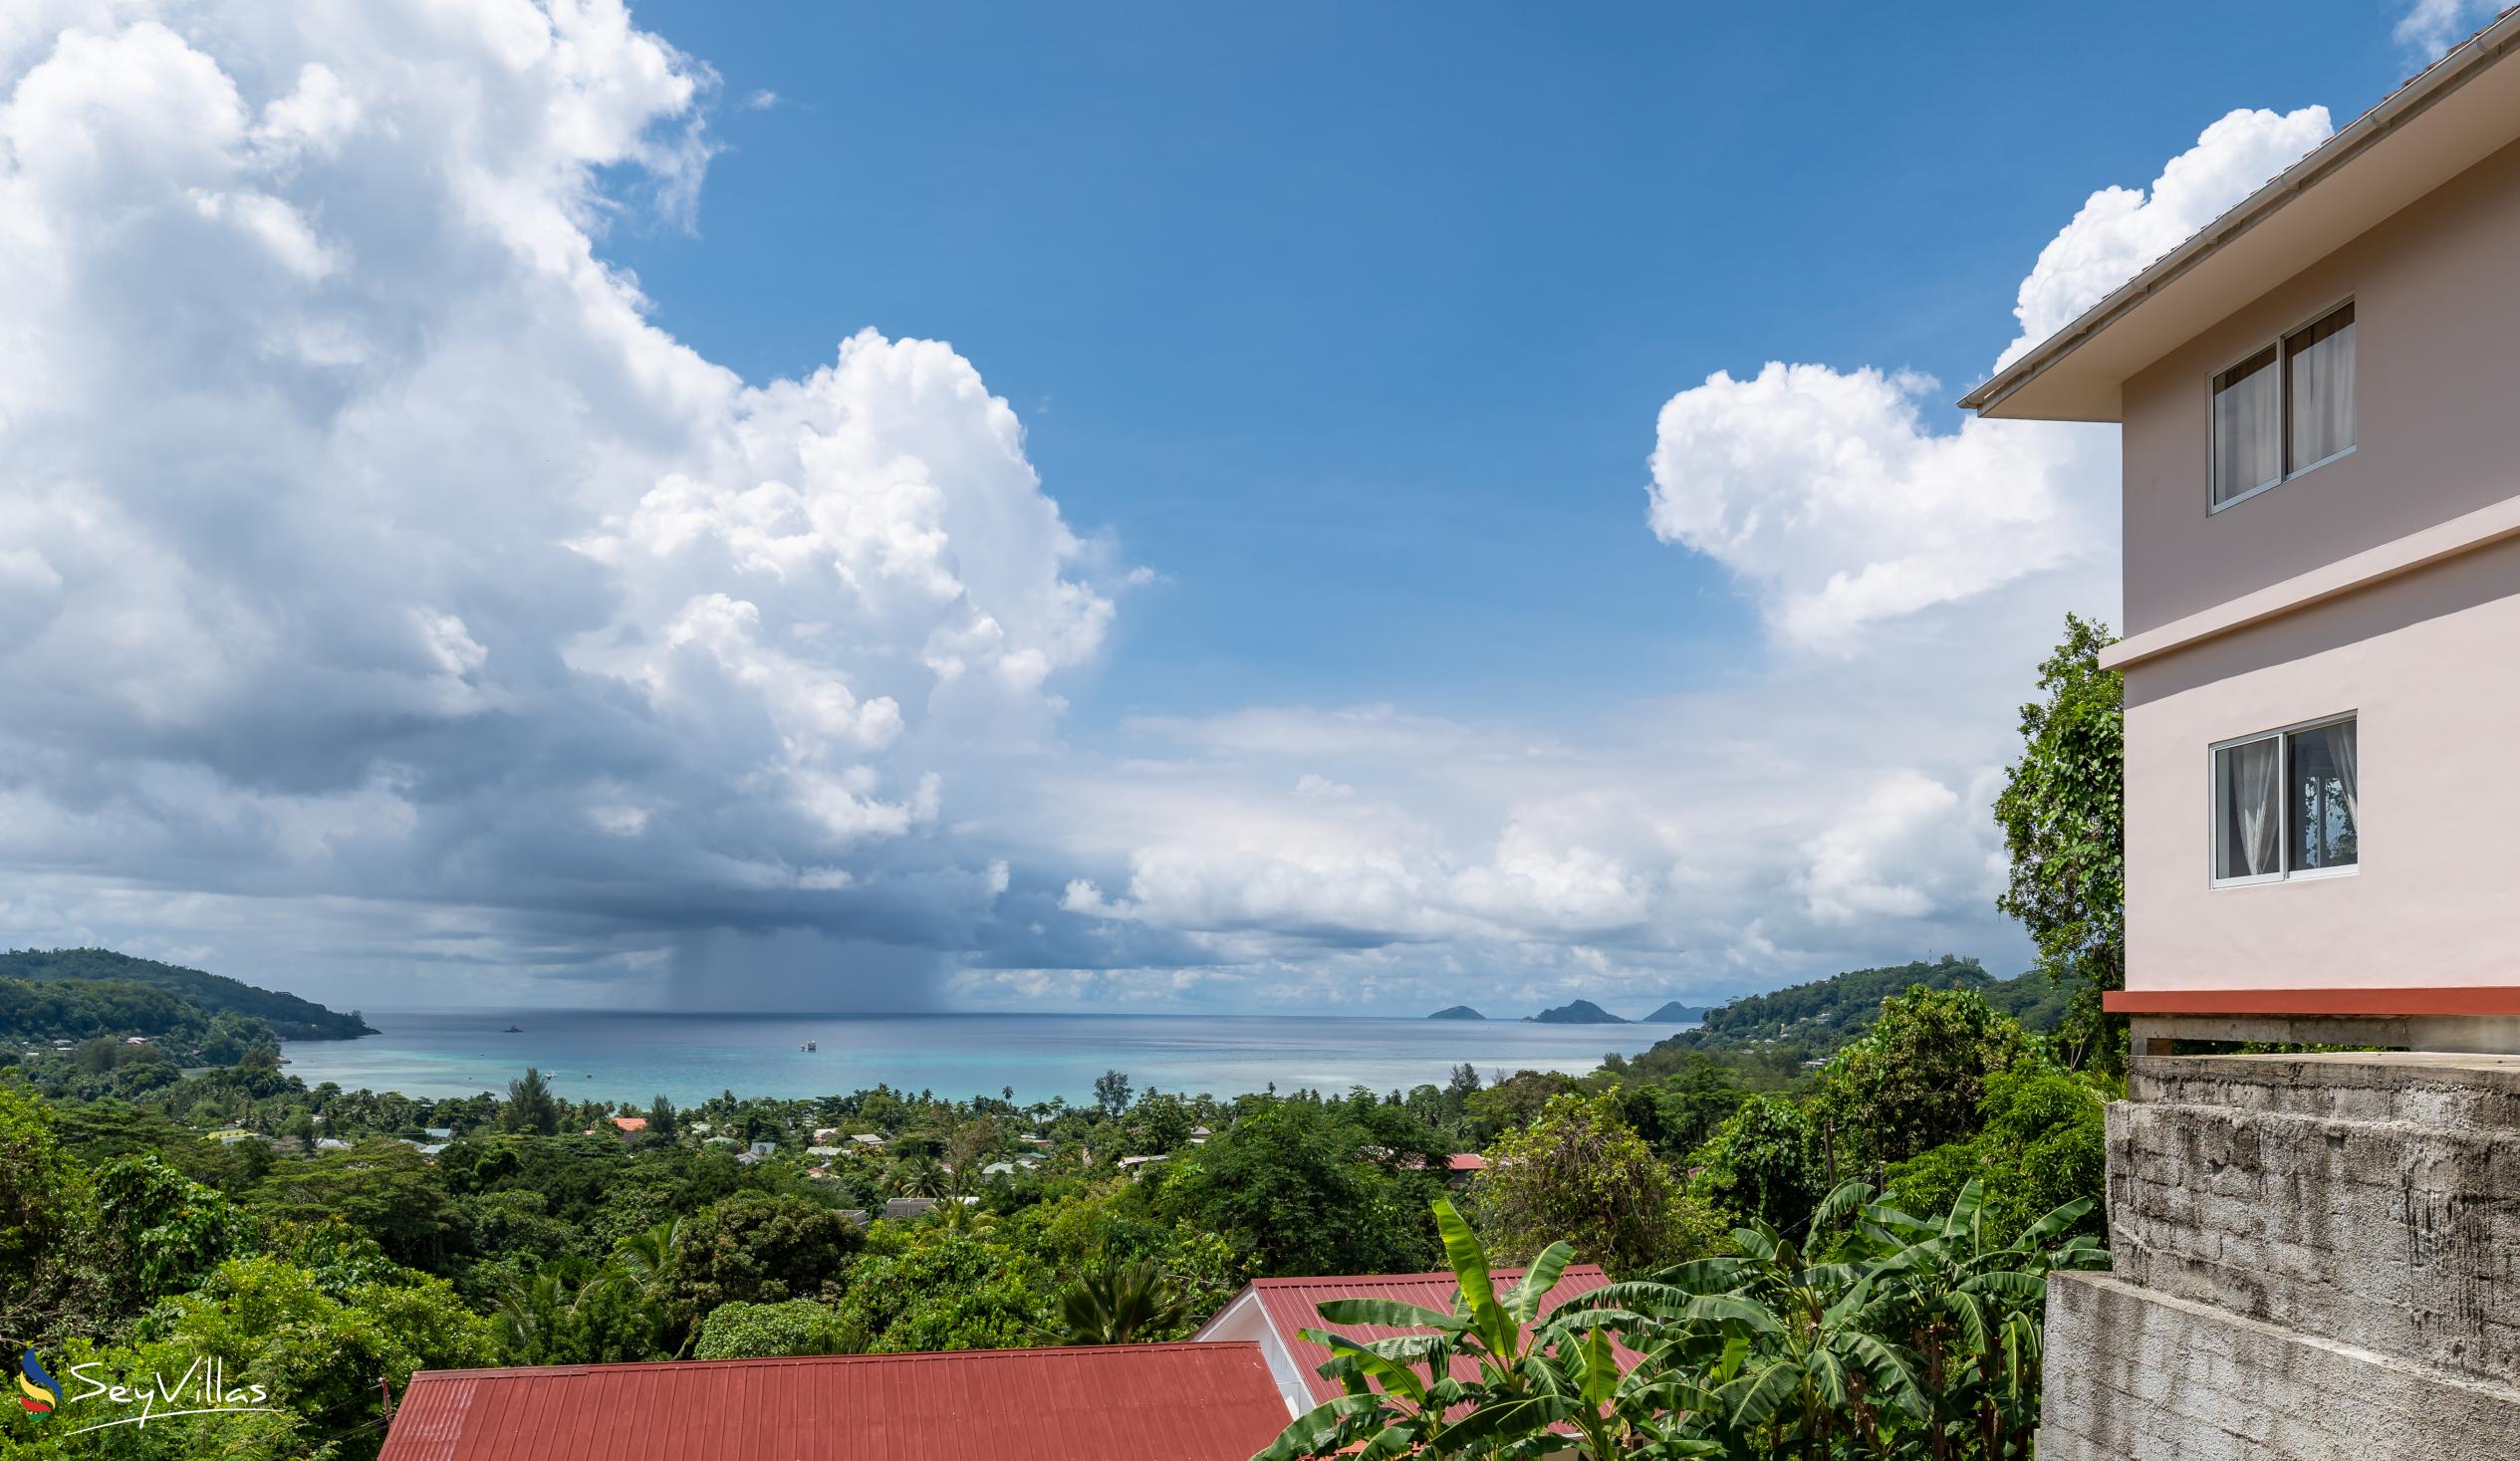 Photo 1: Cella Villa - Outdoor area - Mahé (Seychelles)